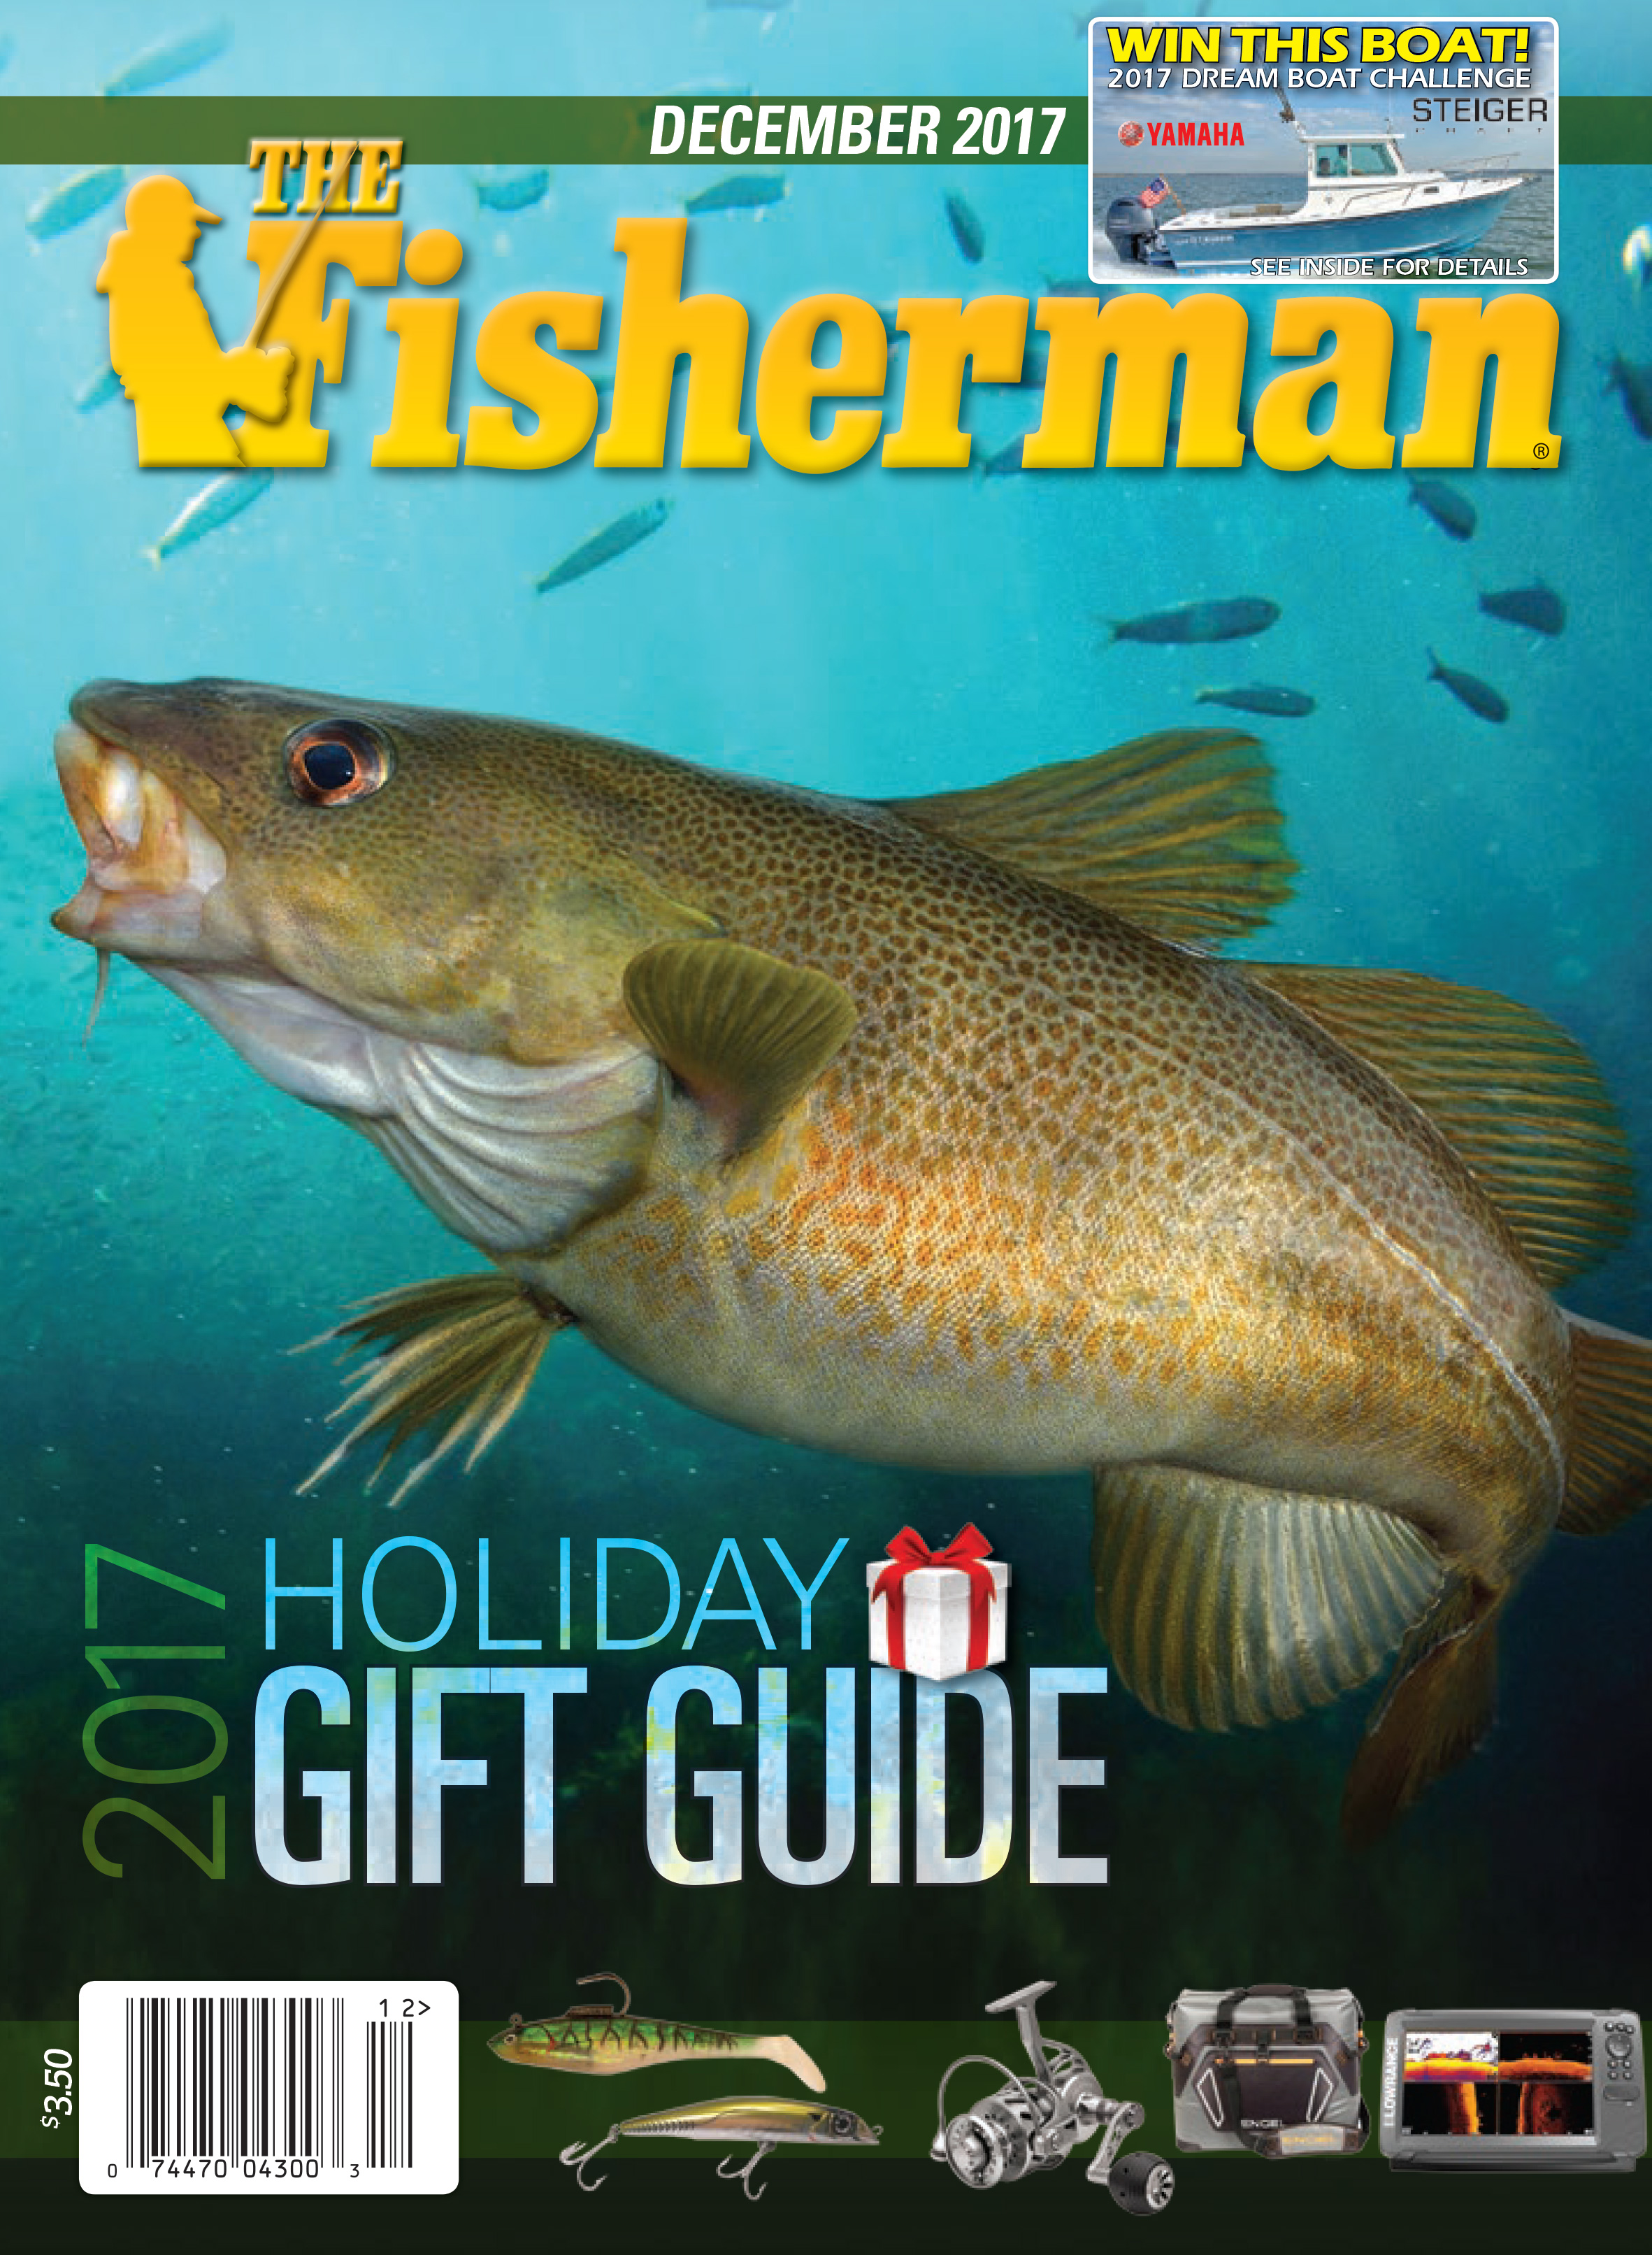 Good Eats: Holiday Recipes - The Fisherman